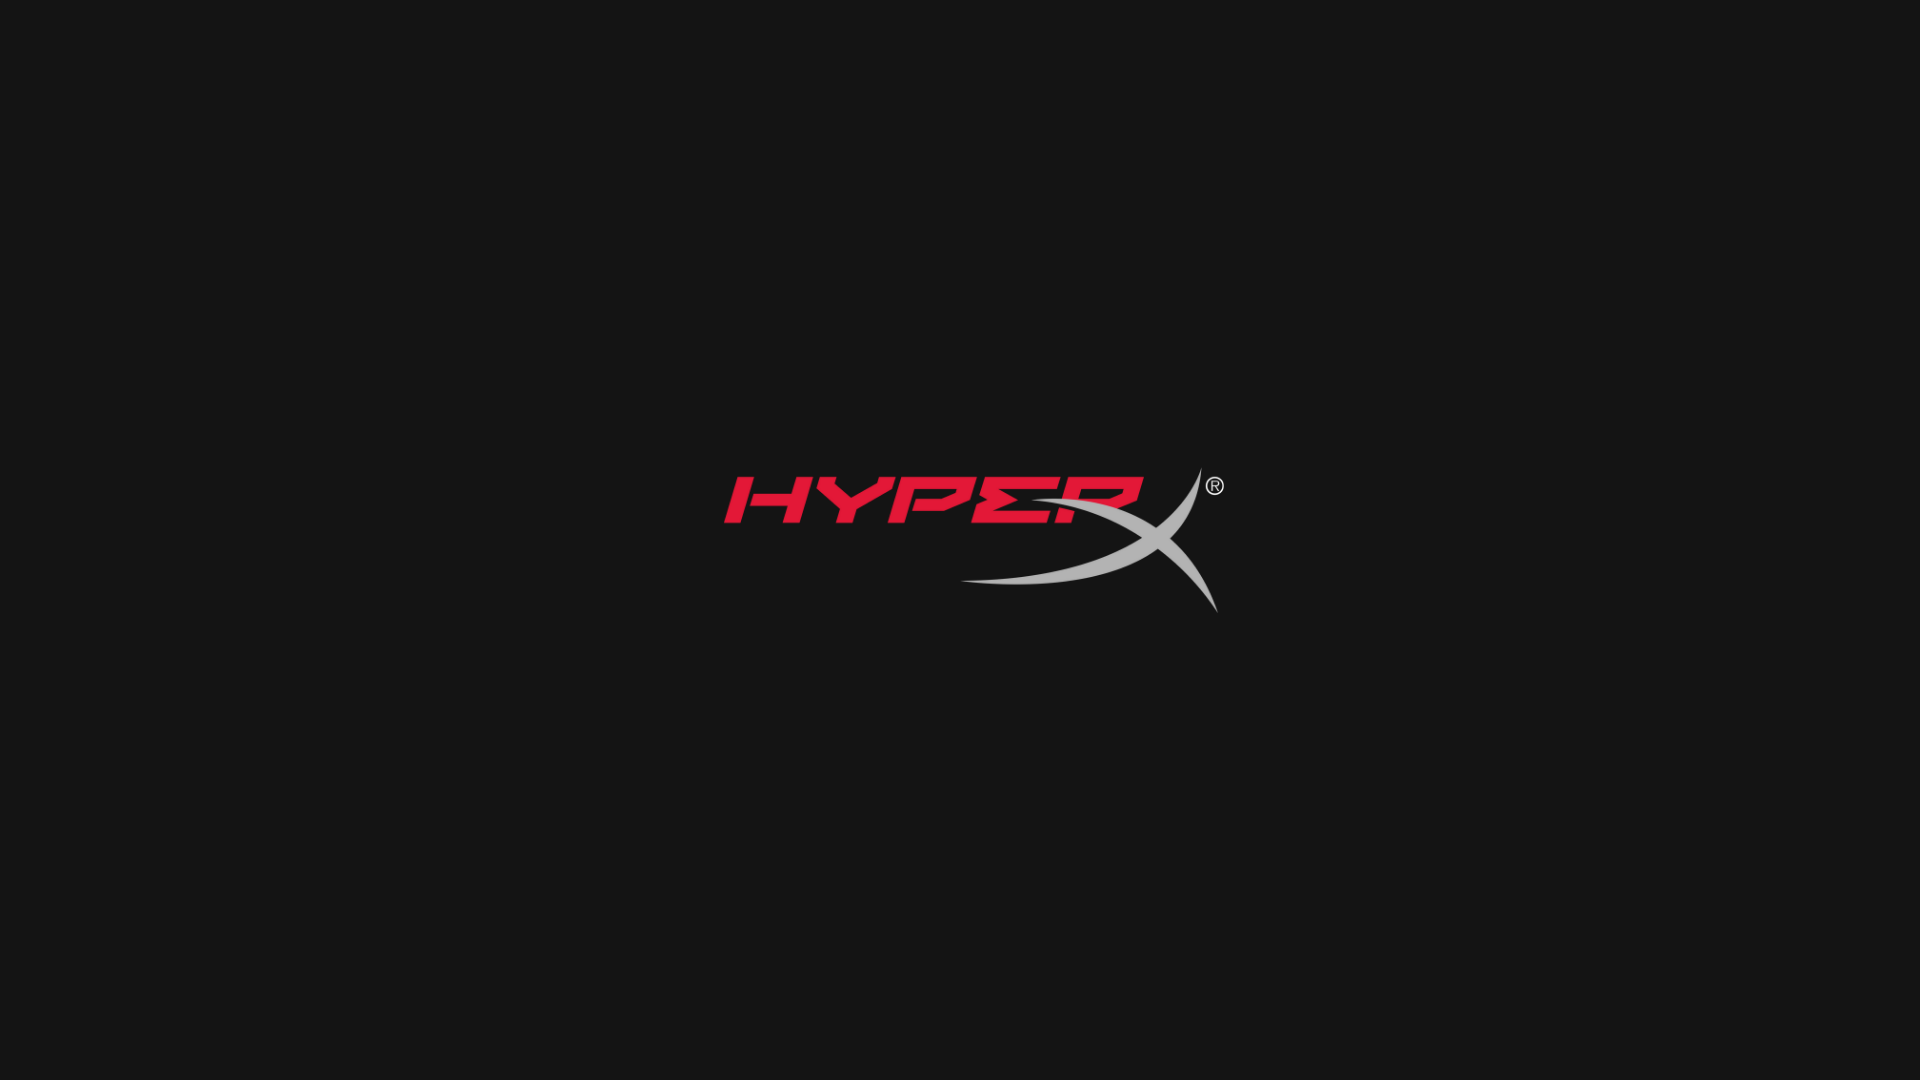 General 1920x1080 HyperX logo PC gaming minimalism simple background dark background